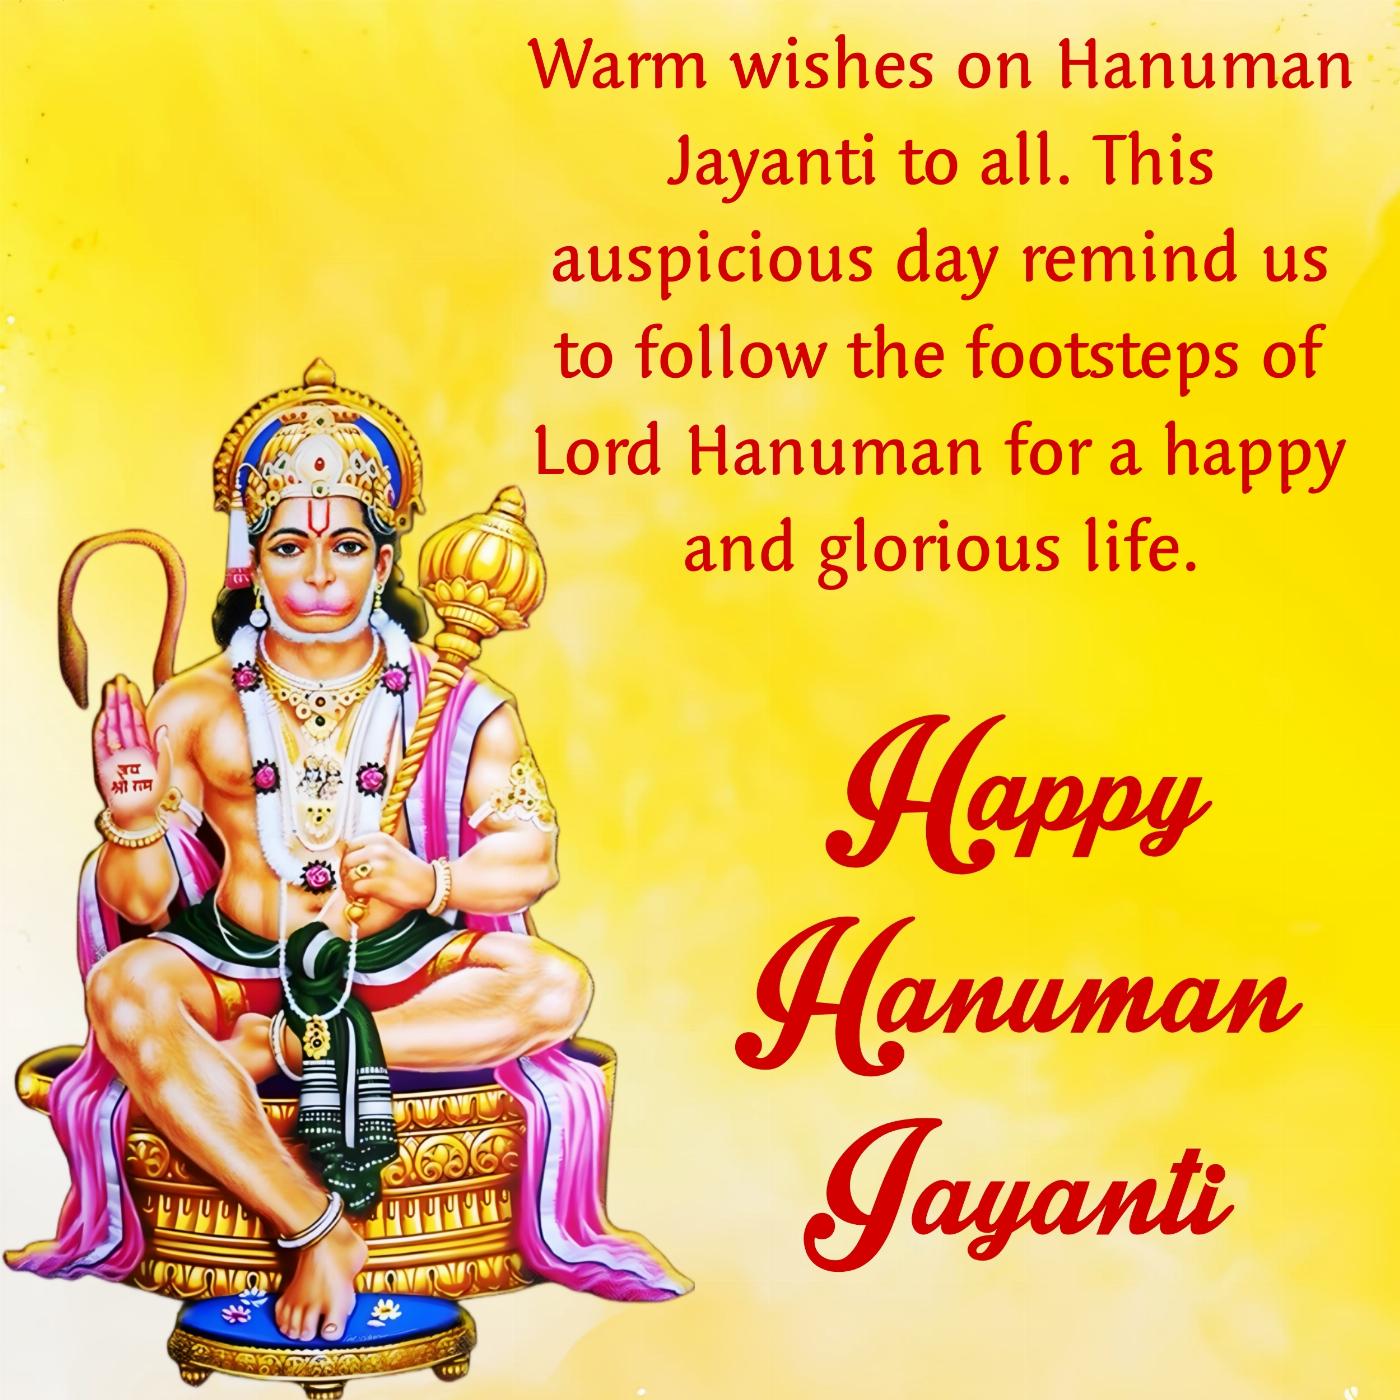 Warm wishes on Hanuman Jayanti to all